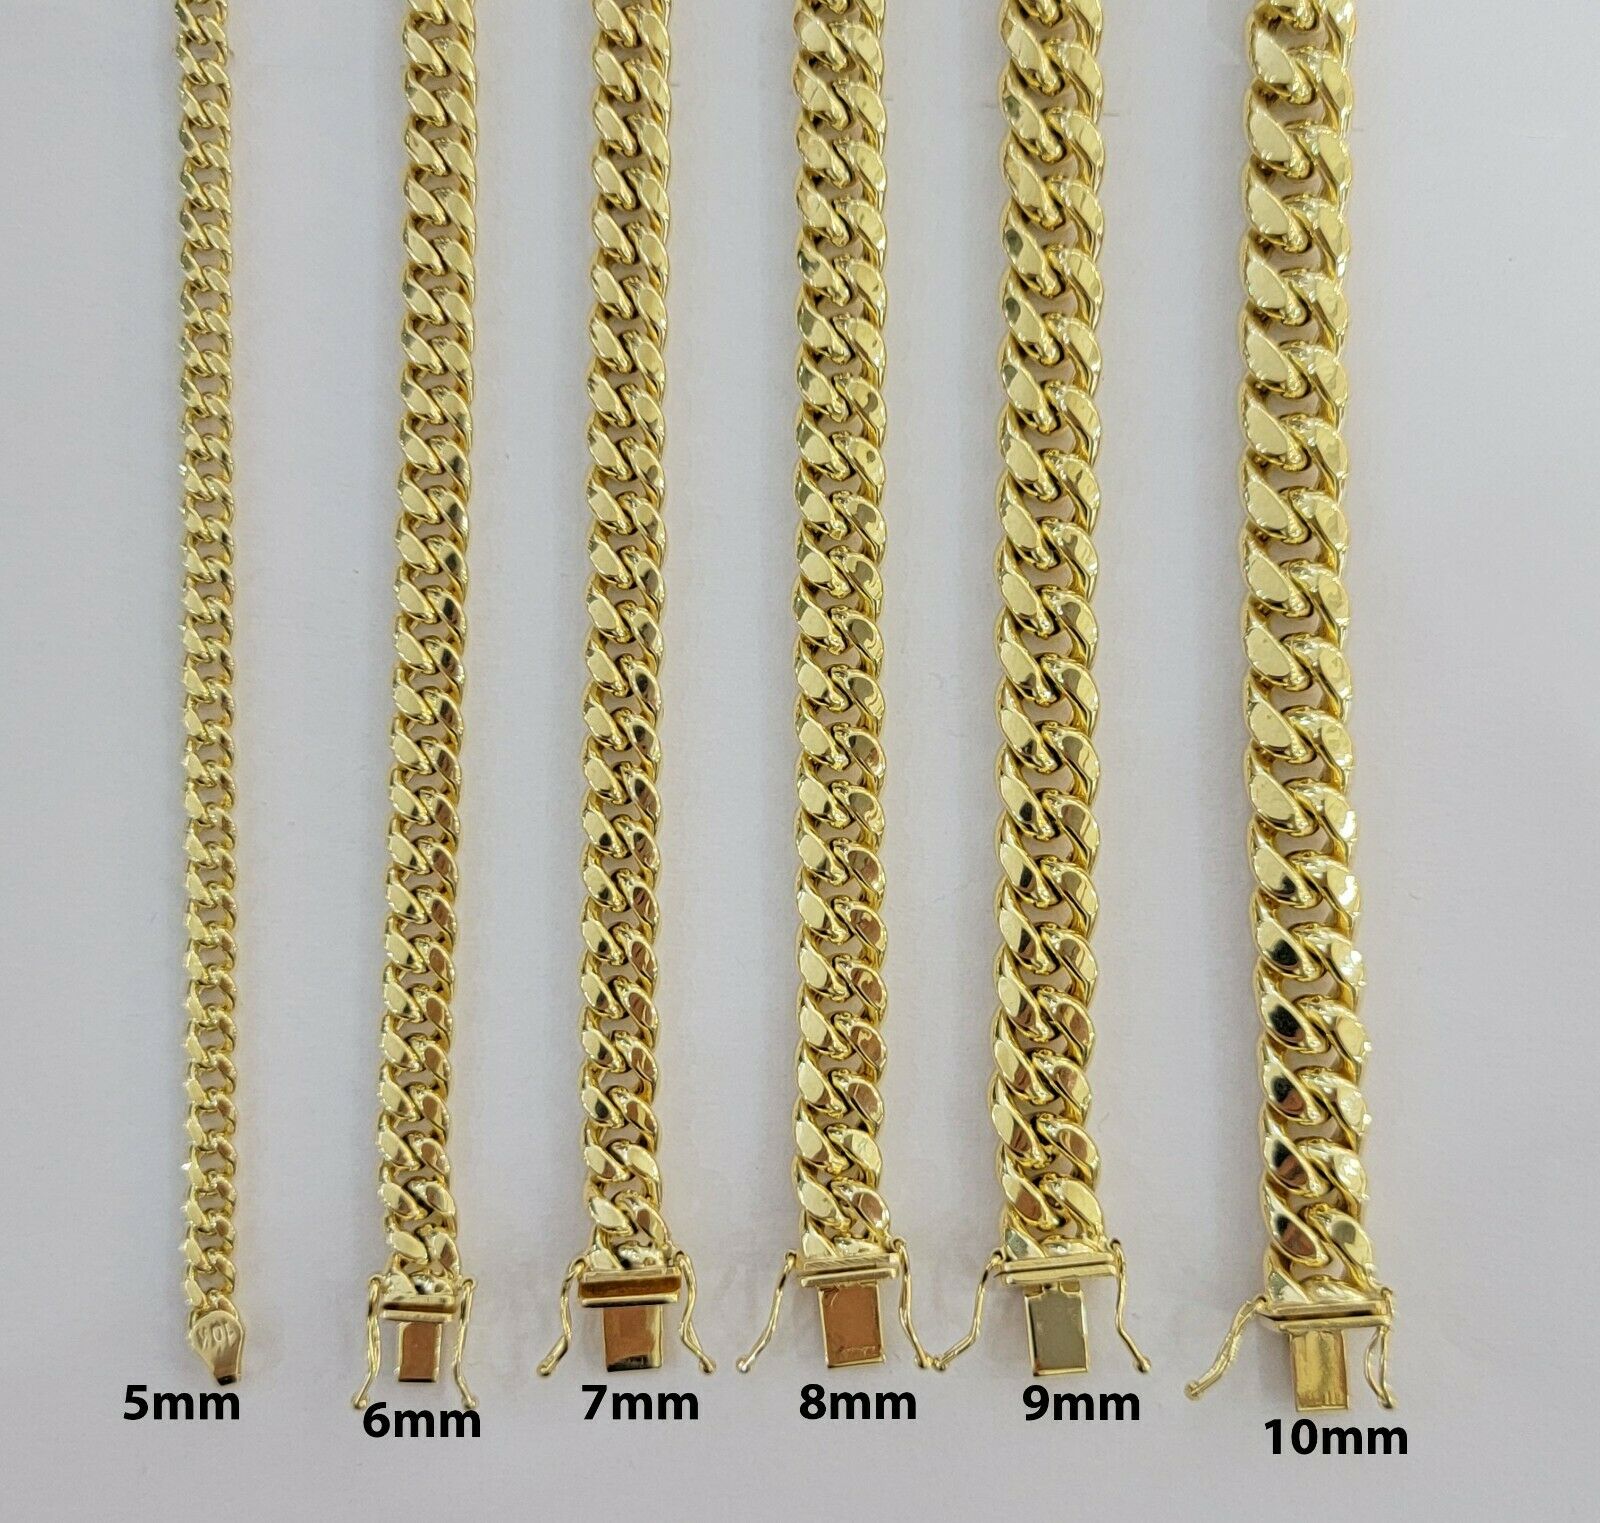 Men's & Women's 14K Yellow Gold Cuban Link Bracelet 6 mm 8 Inches